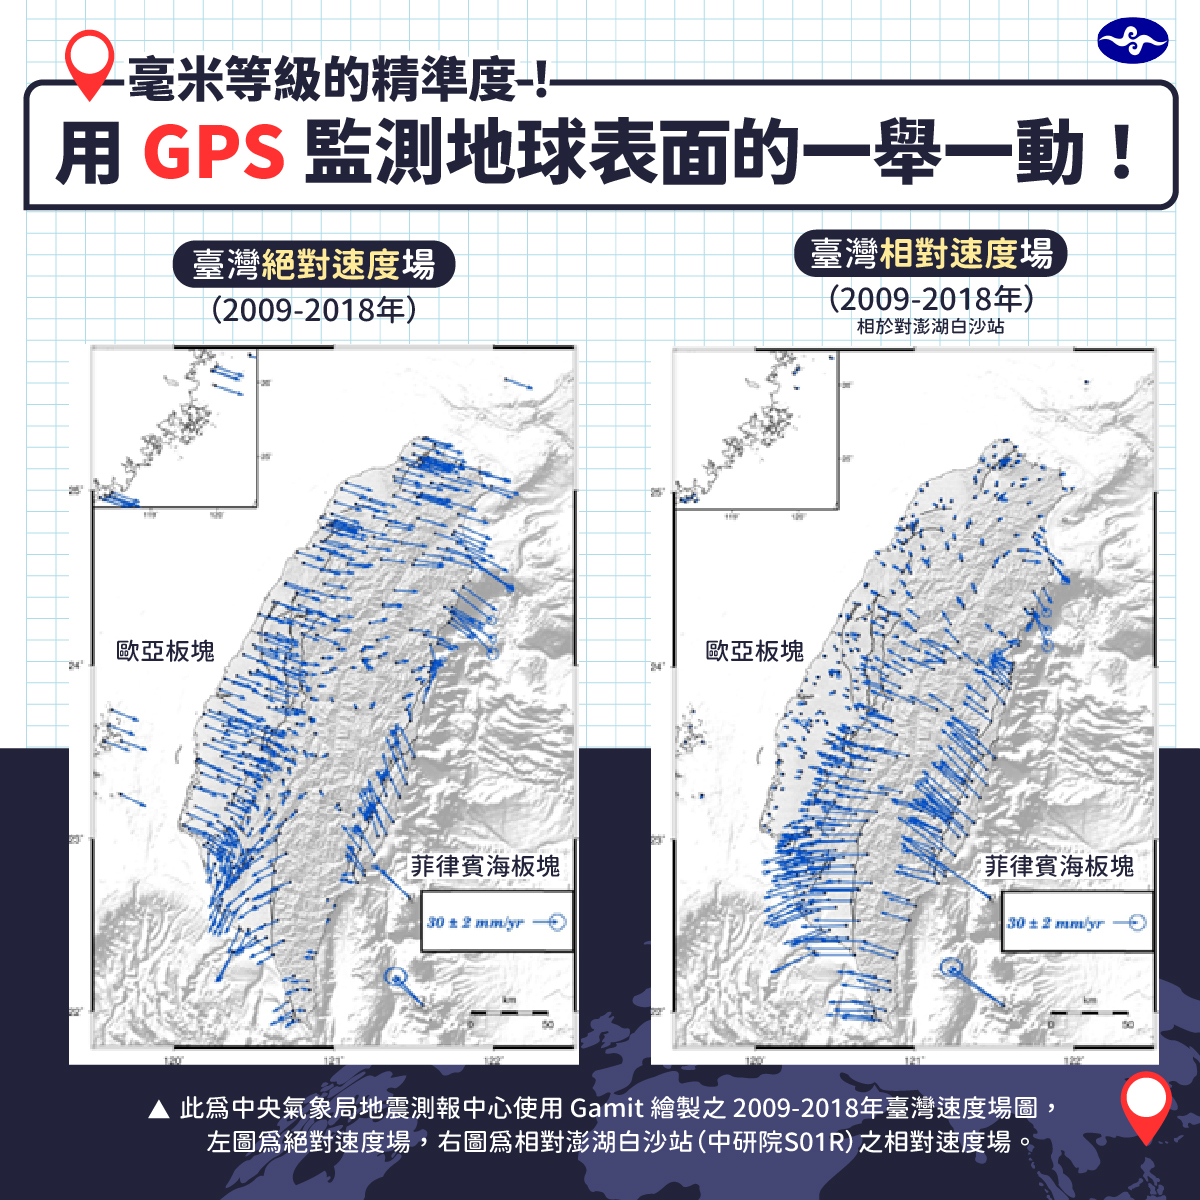 Re: [新聞] 大地震！台灣竟「真的移動」爆遠離大陸　